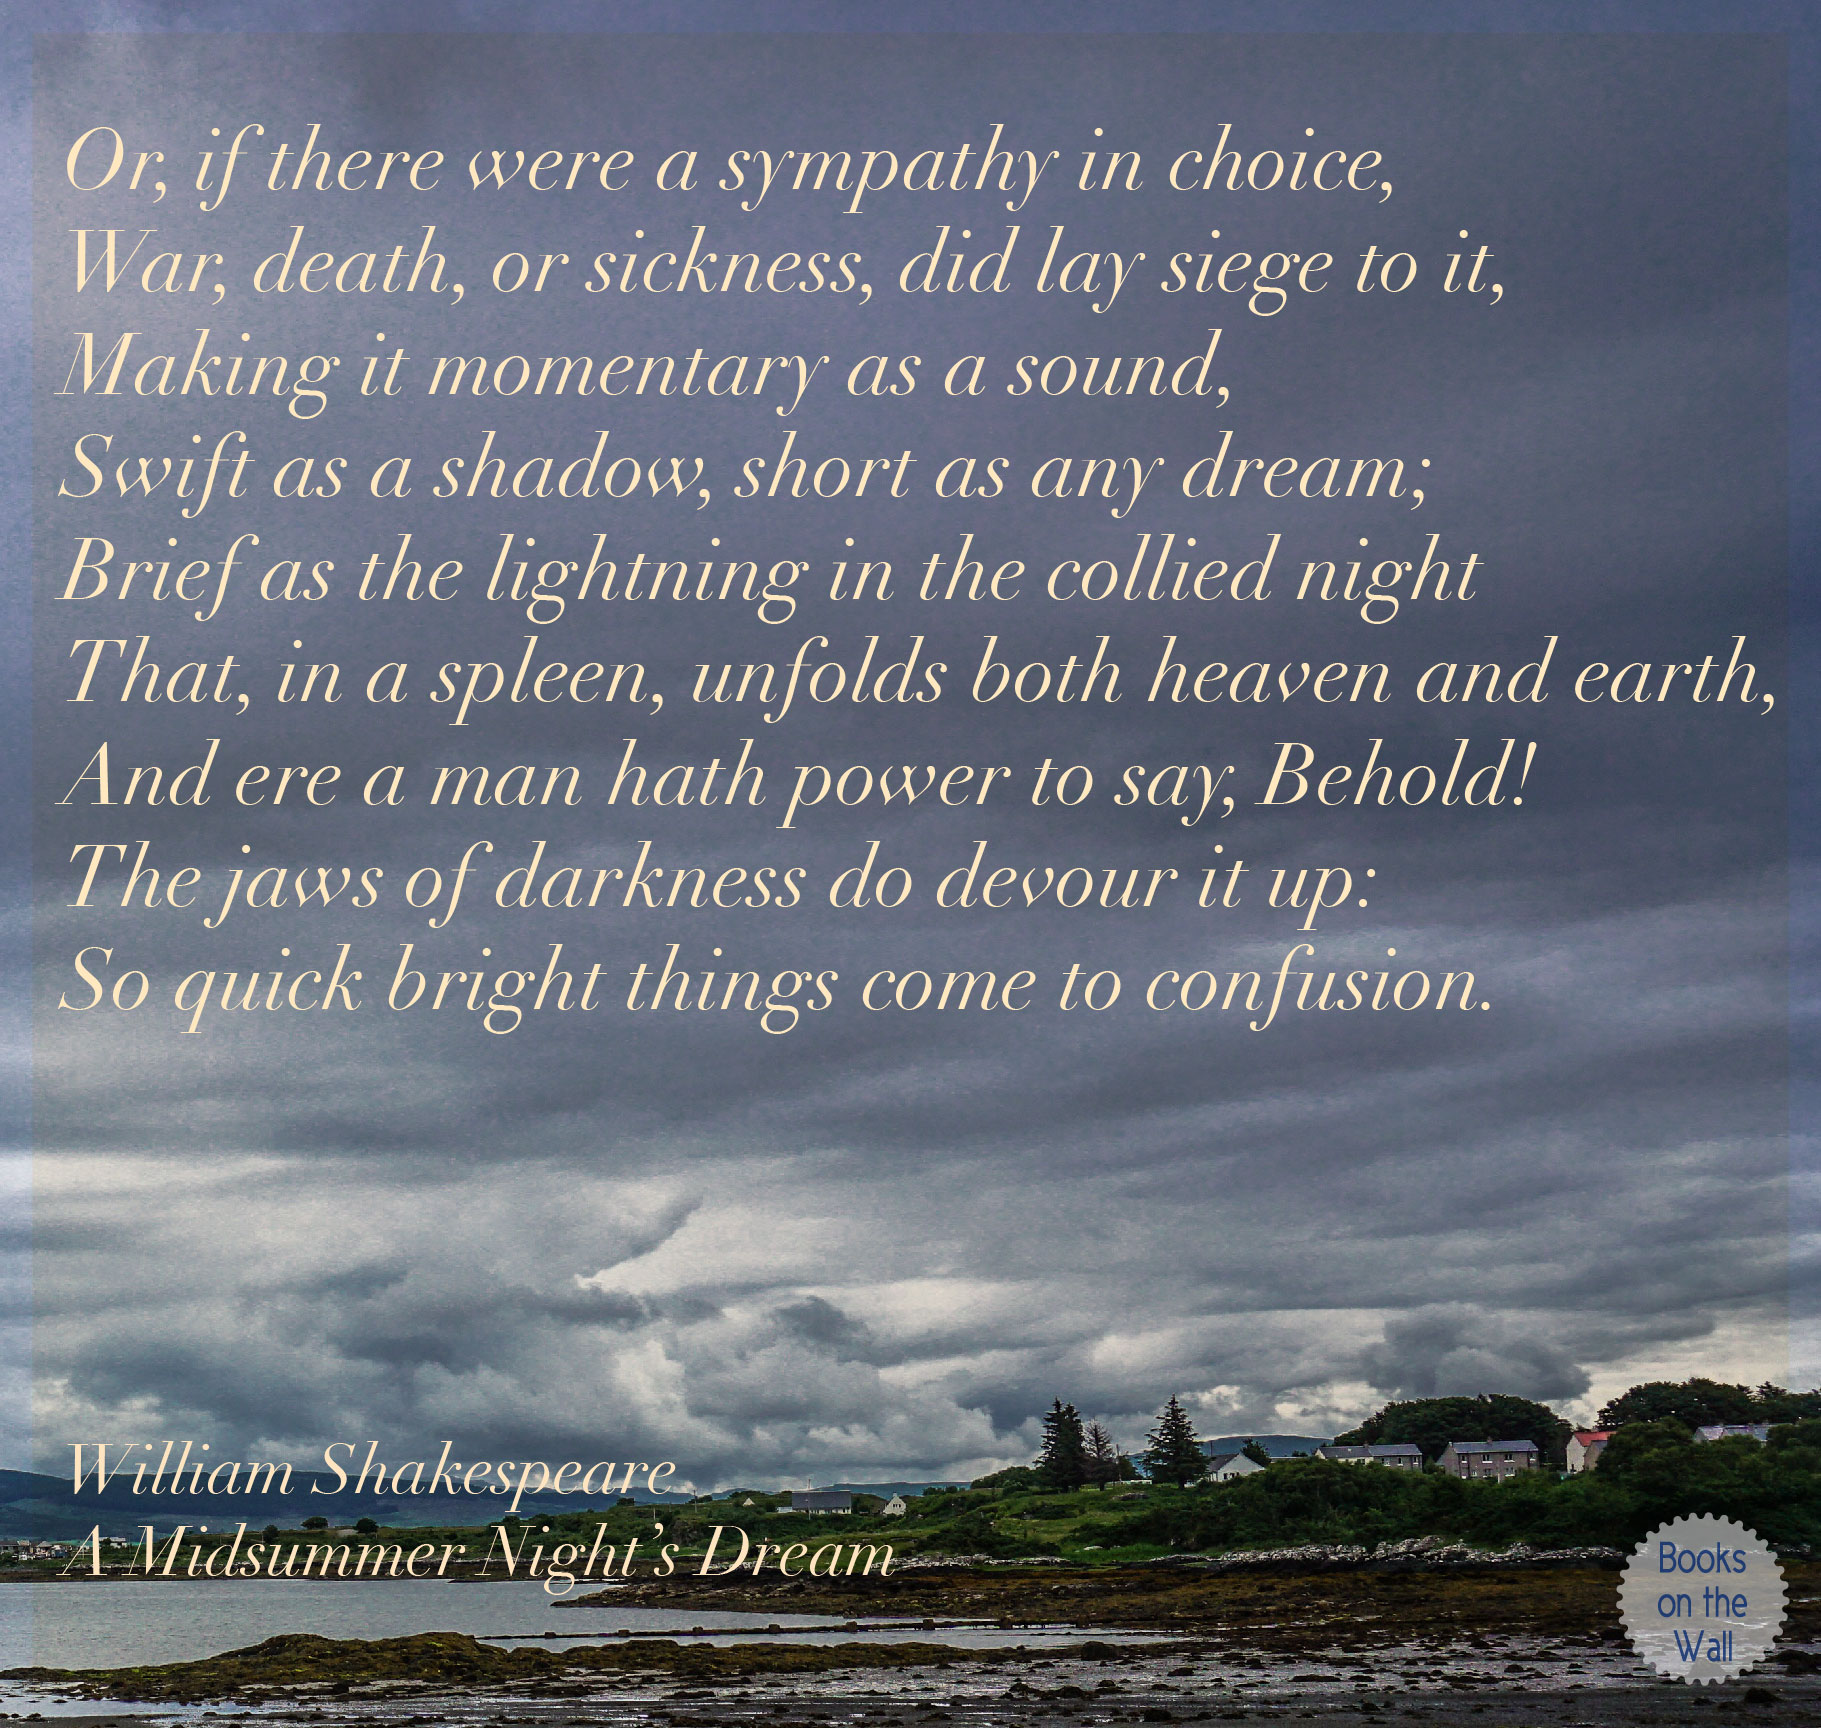 William Shakespeare Quote: A Midsummer Night's Dream 2